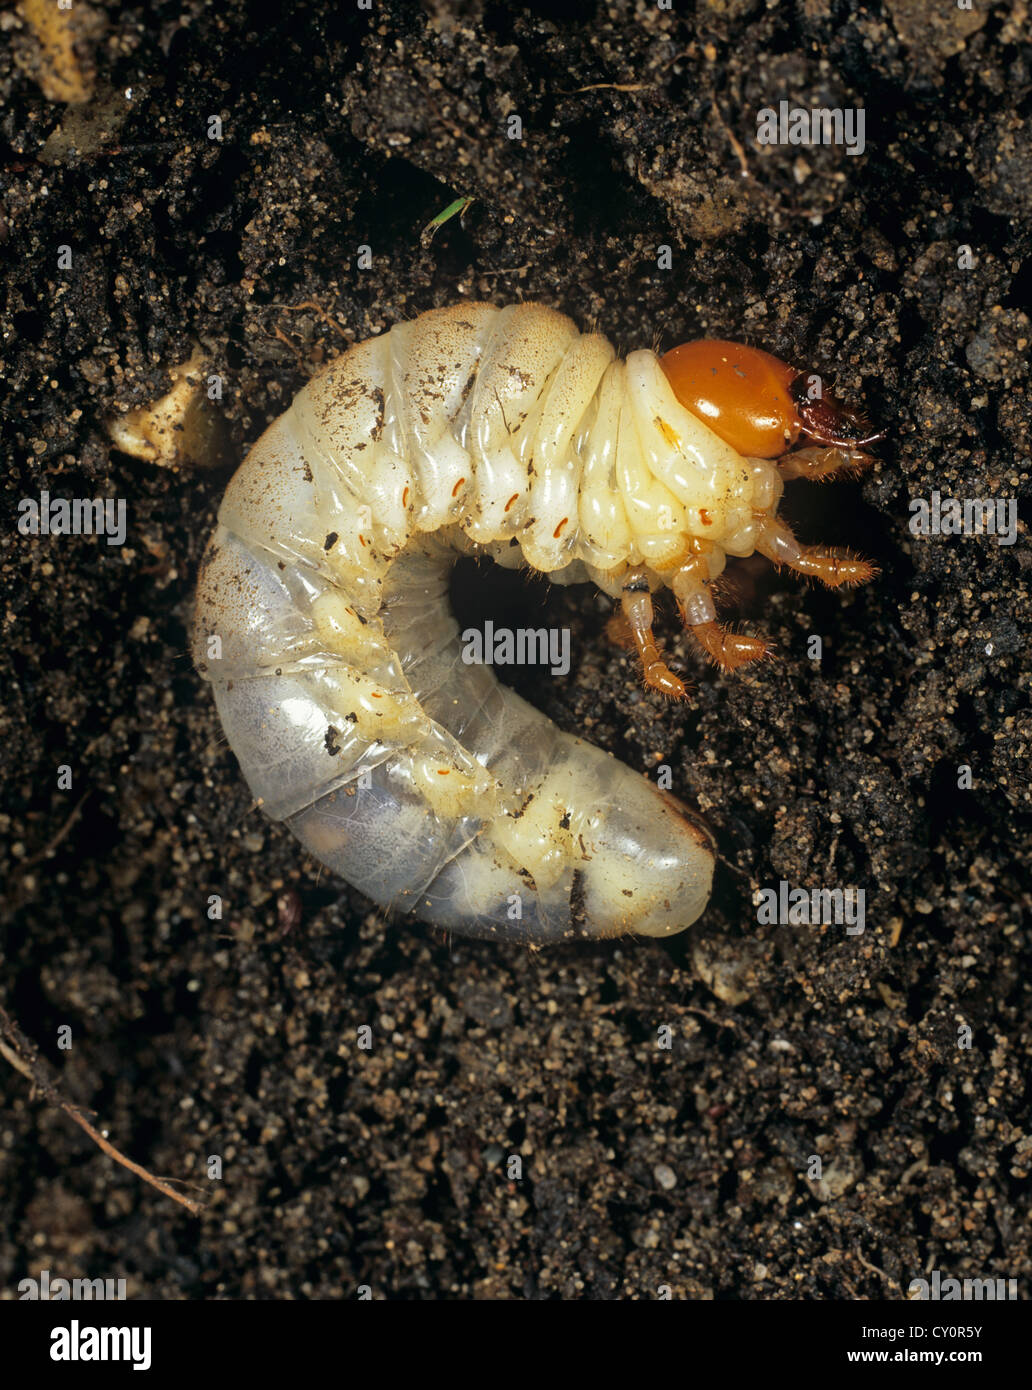 Europeo, cockchafer Melolontha melolontha, larva, grub sul suolo Foto Stock